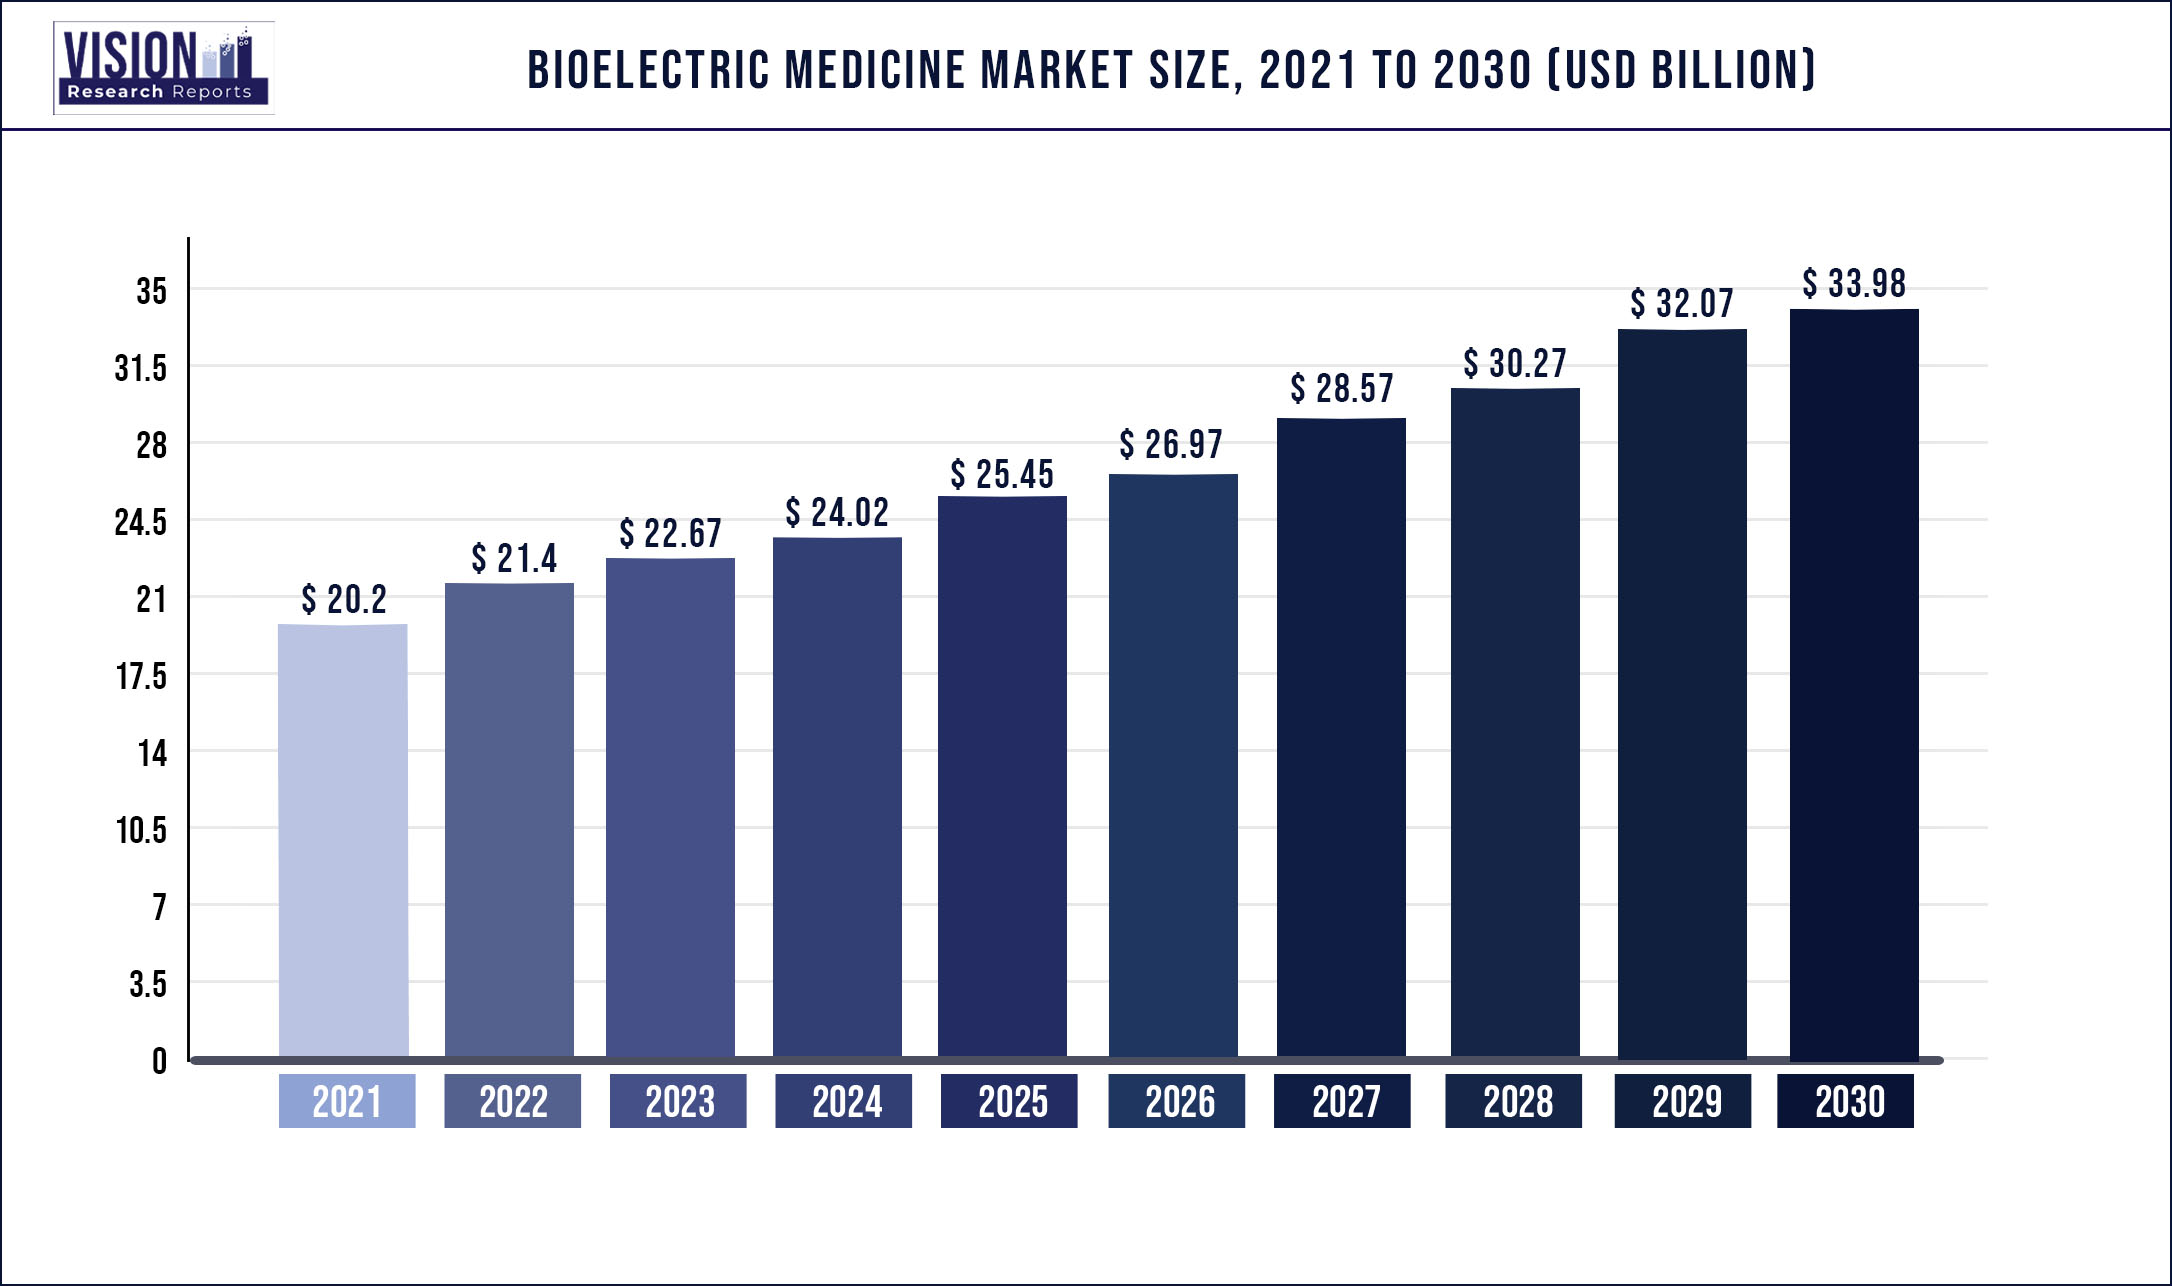 Bioelectric Medicine Market Size 2021 to 2030